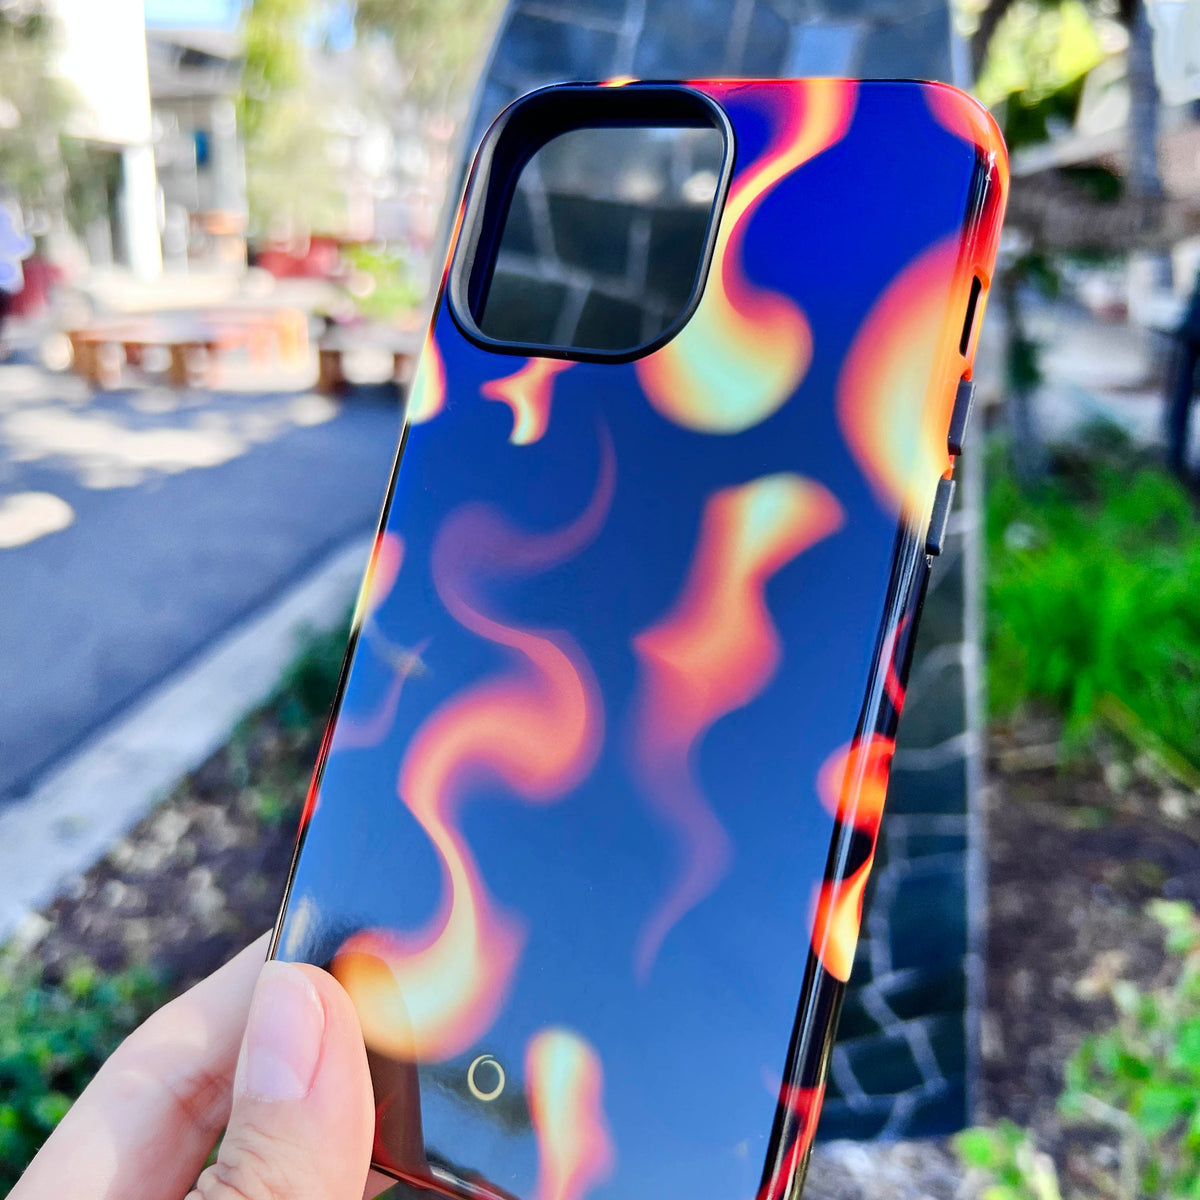 Groovy Orange Flame iPhone Case - iPhone 12 Pro Max